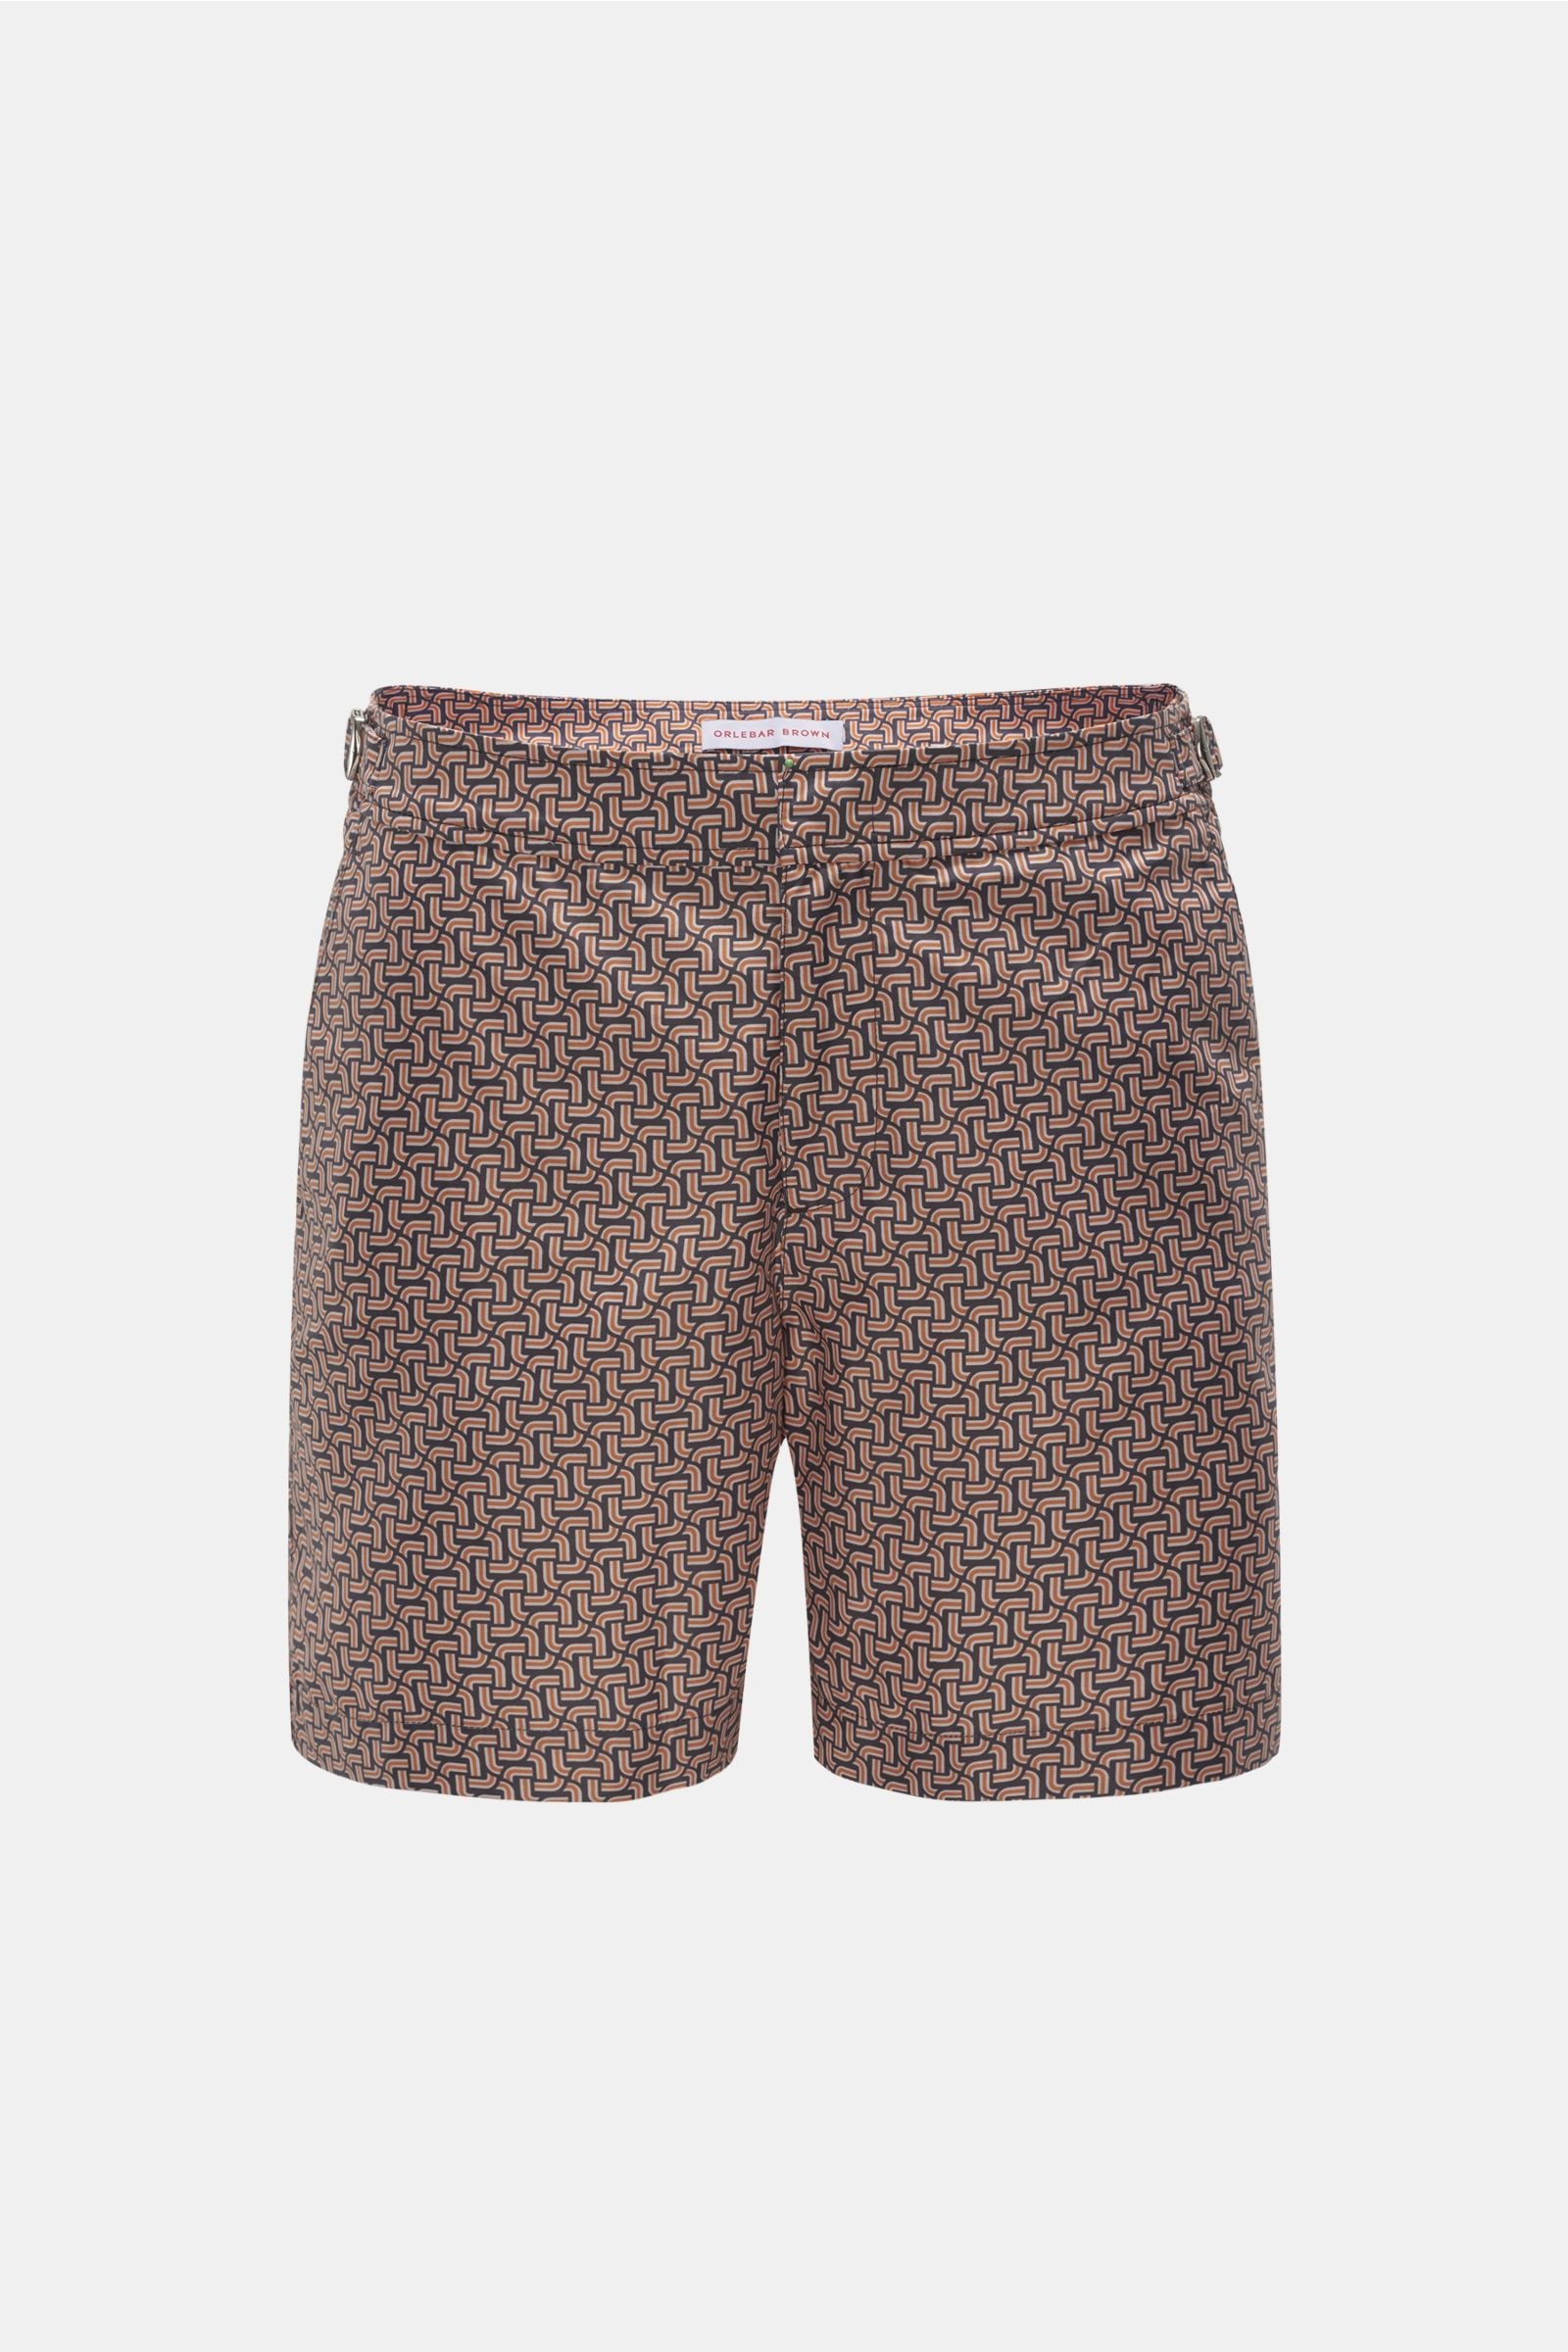 Swim shorts 'Bulldog' orange/dark grey patterned